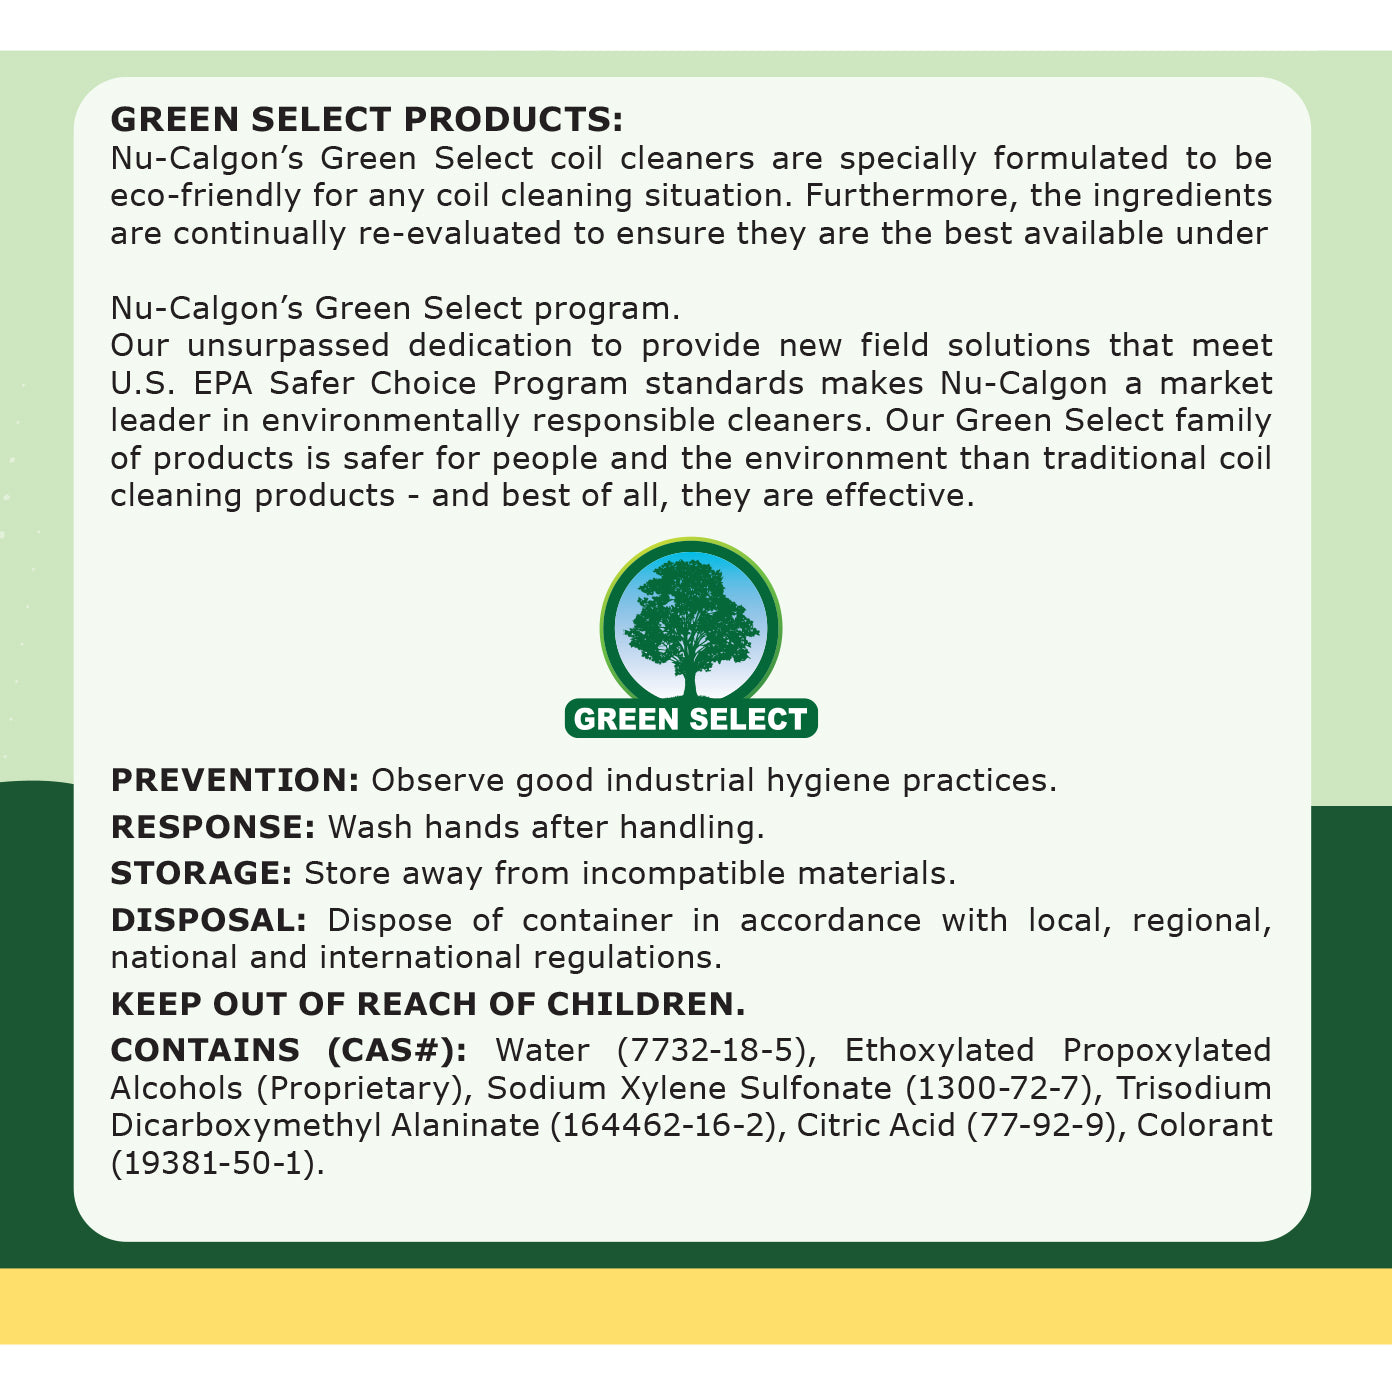 4191-08 - Evap-Green OEM Approved Aluminum Coil Cleaner - 1 Gallon